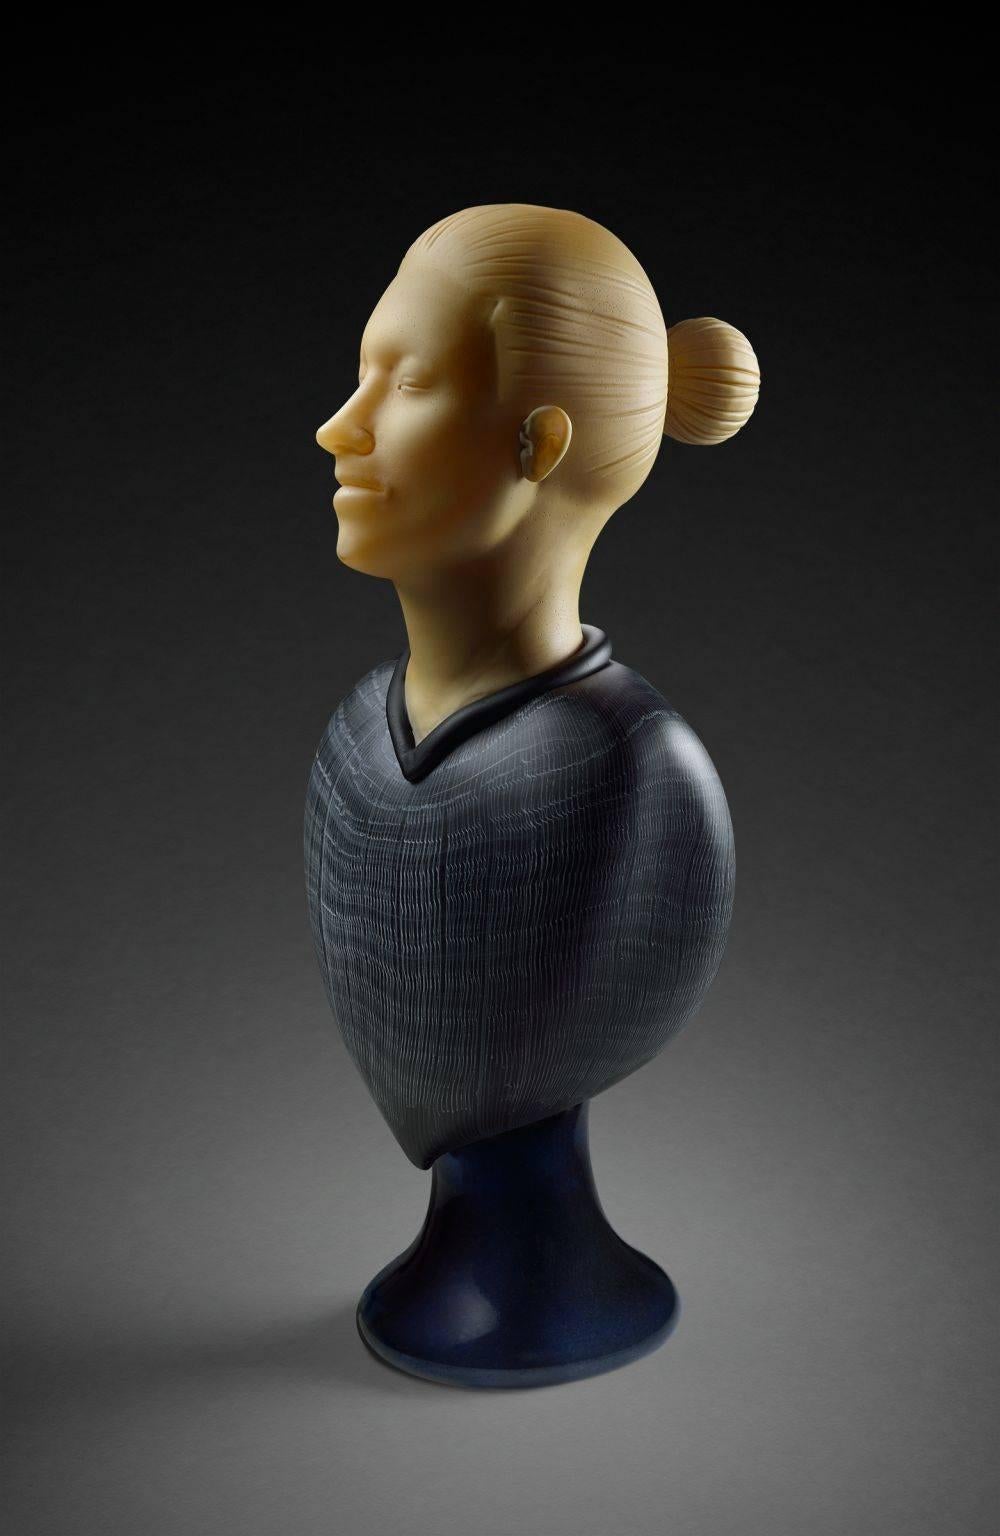 Ross Richmond Figurative Sculpture - FEMALE BUST WITH PLINTH - hand-blown glass sculpture of woman